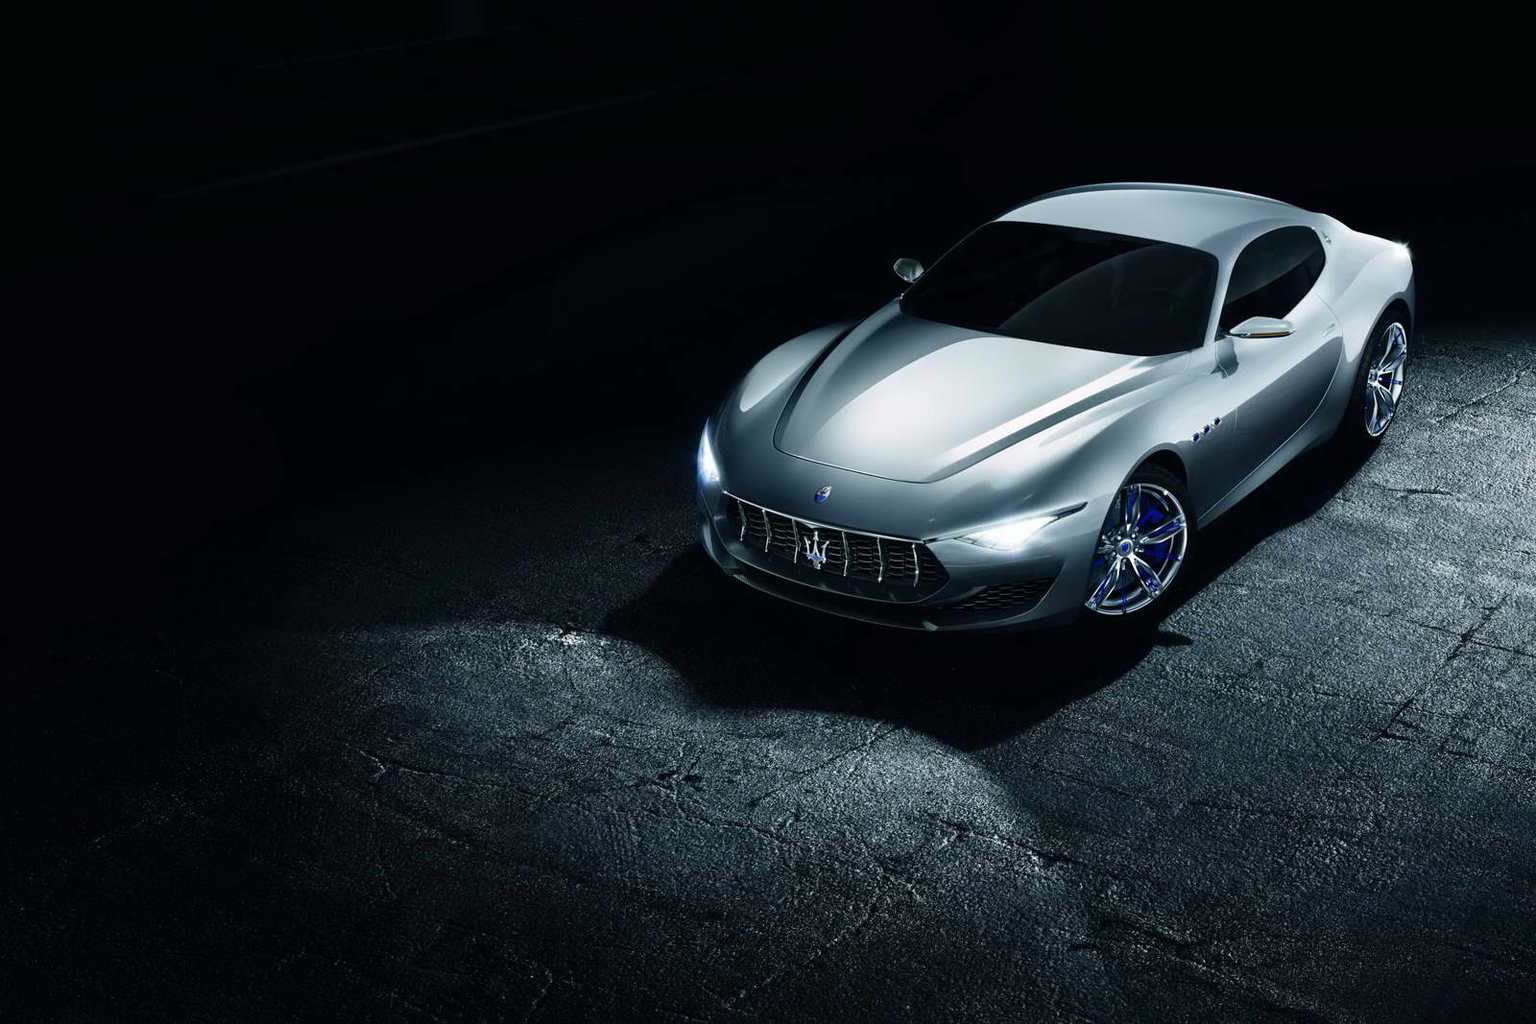 Maserati 2